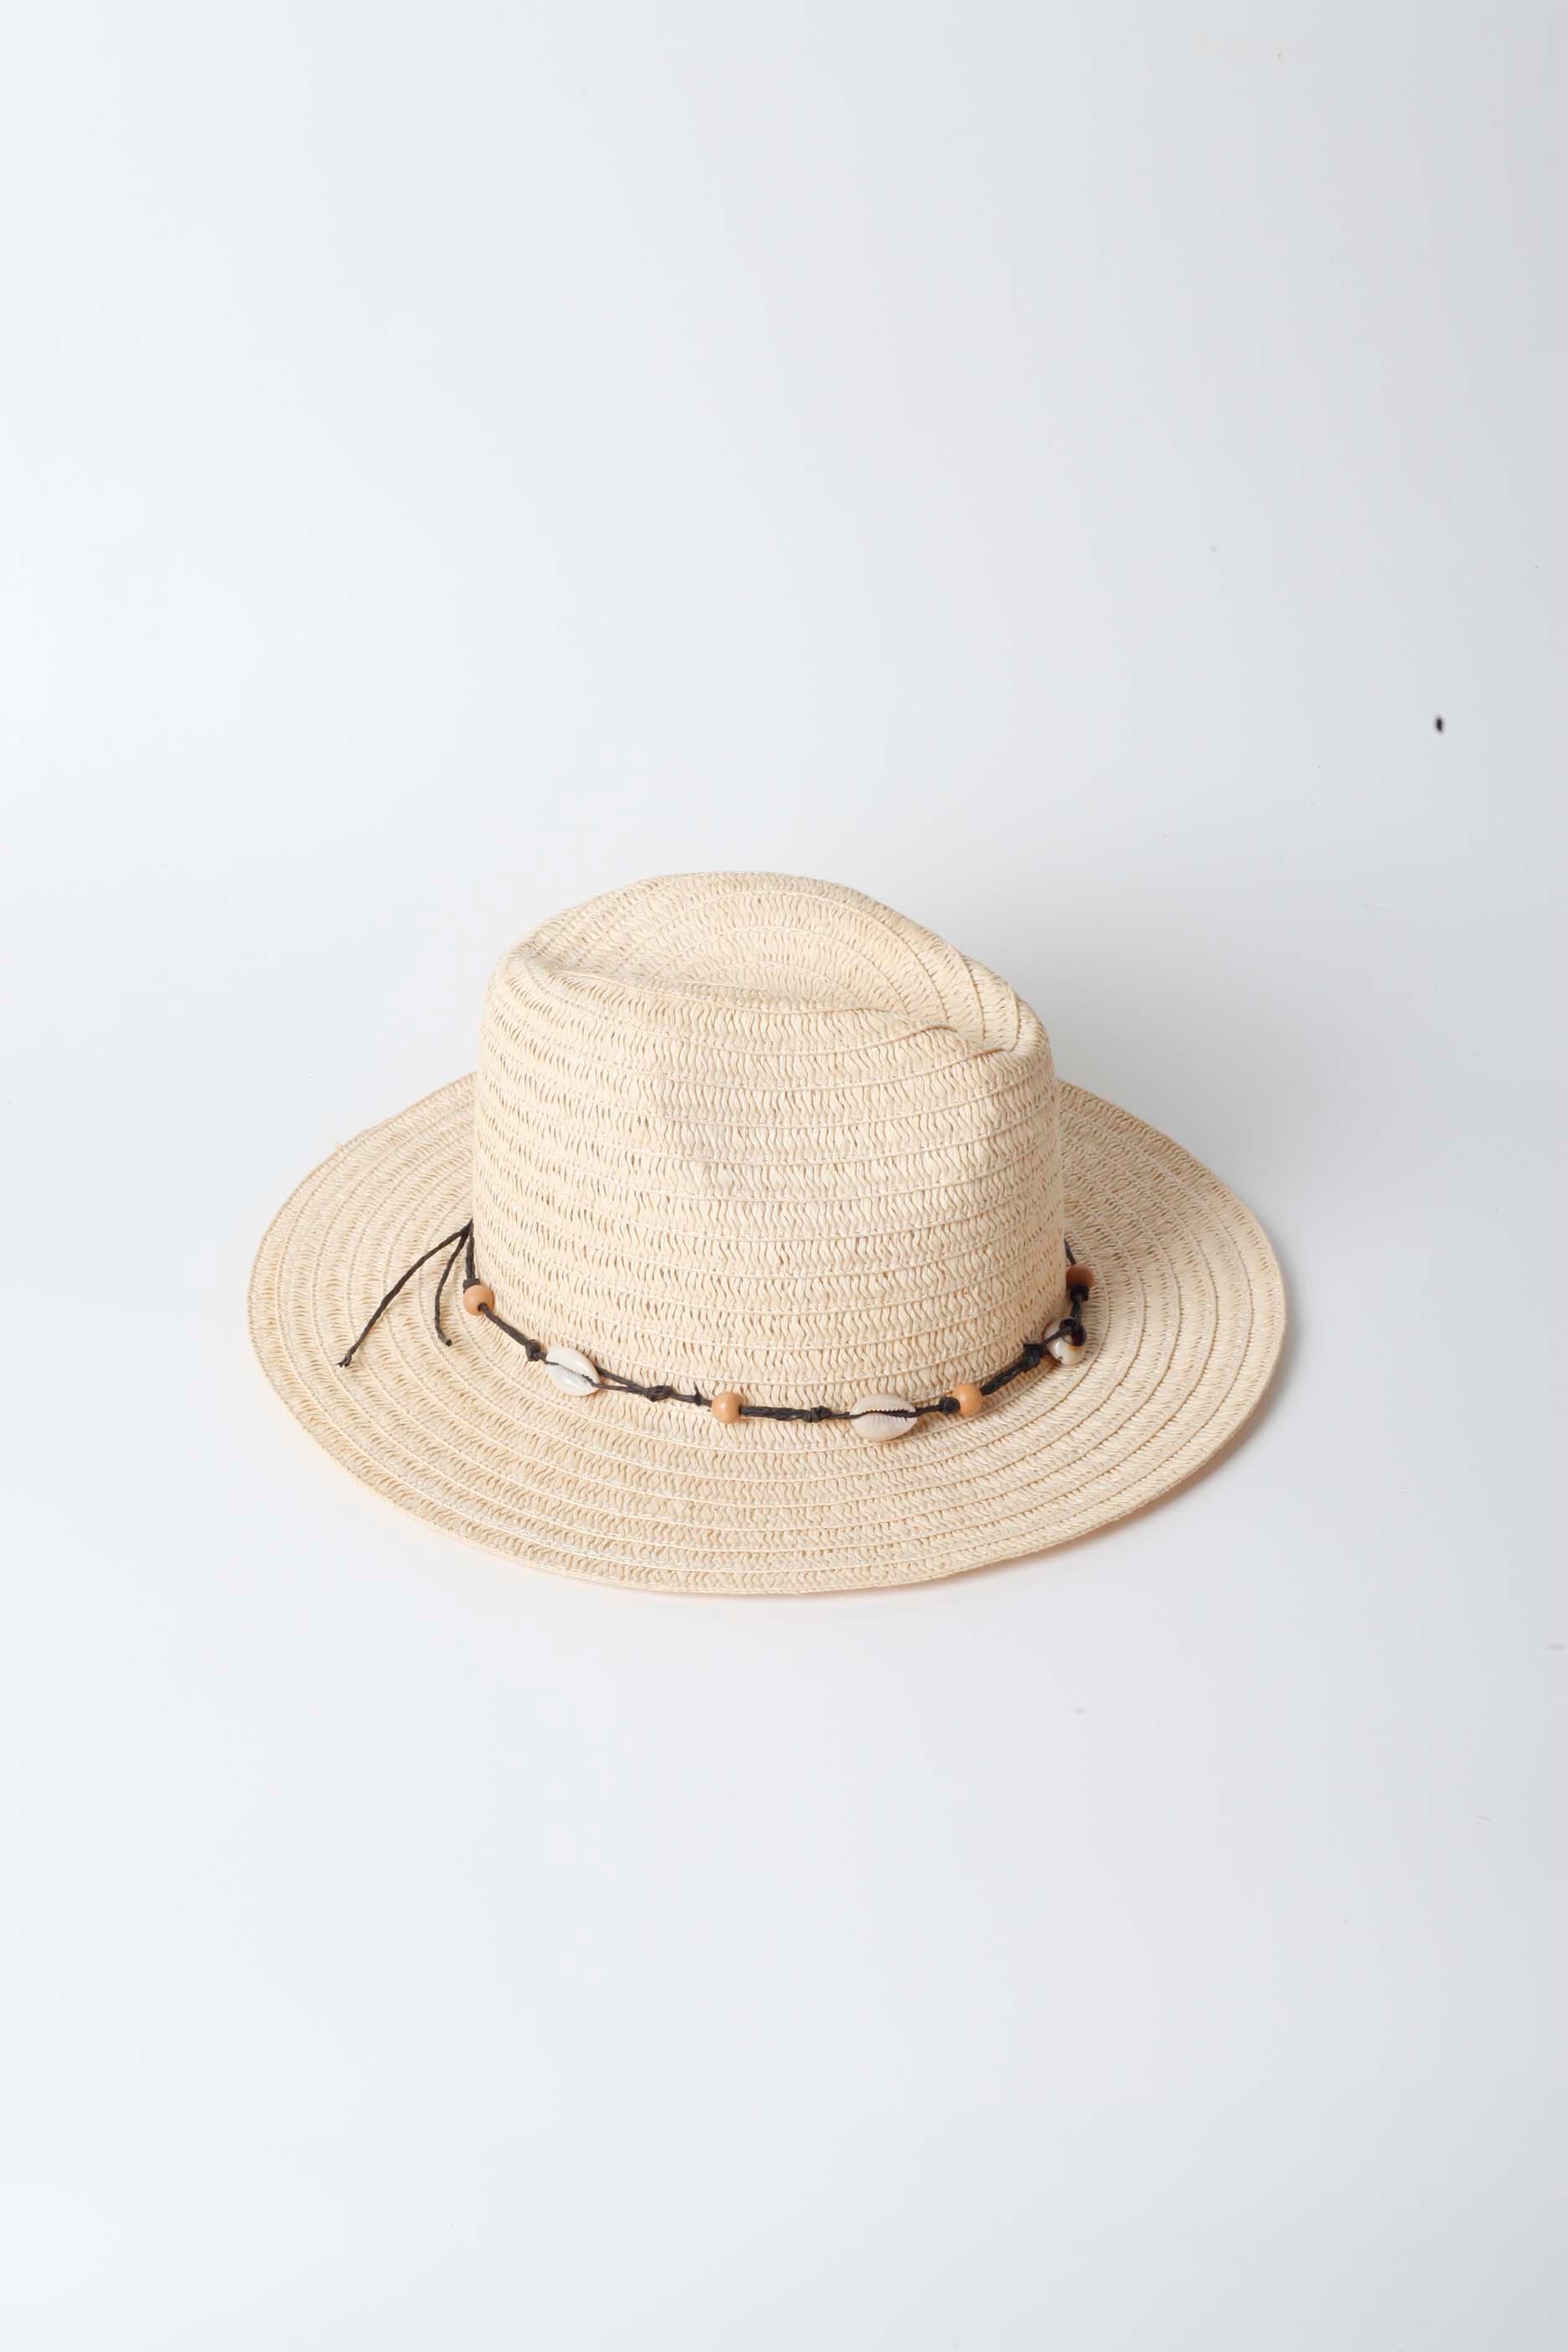 Straw Cowboy Hat with Shells